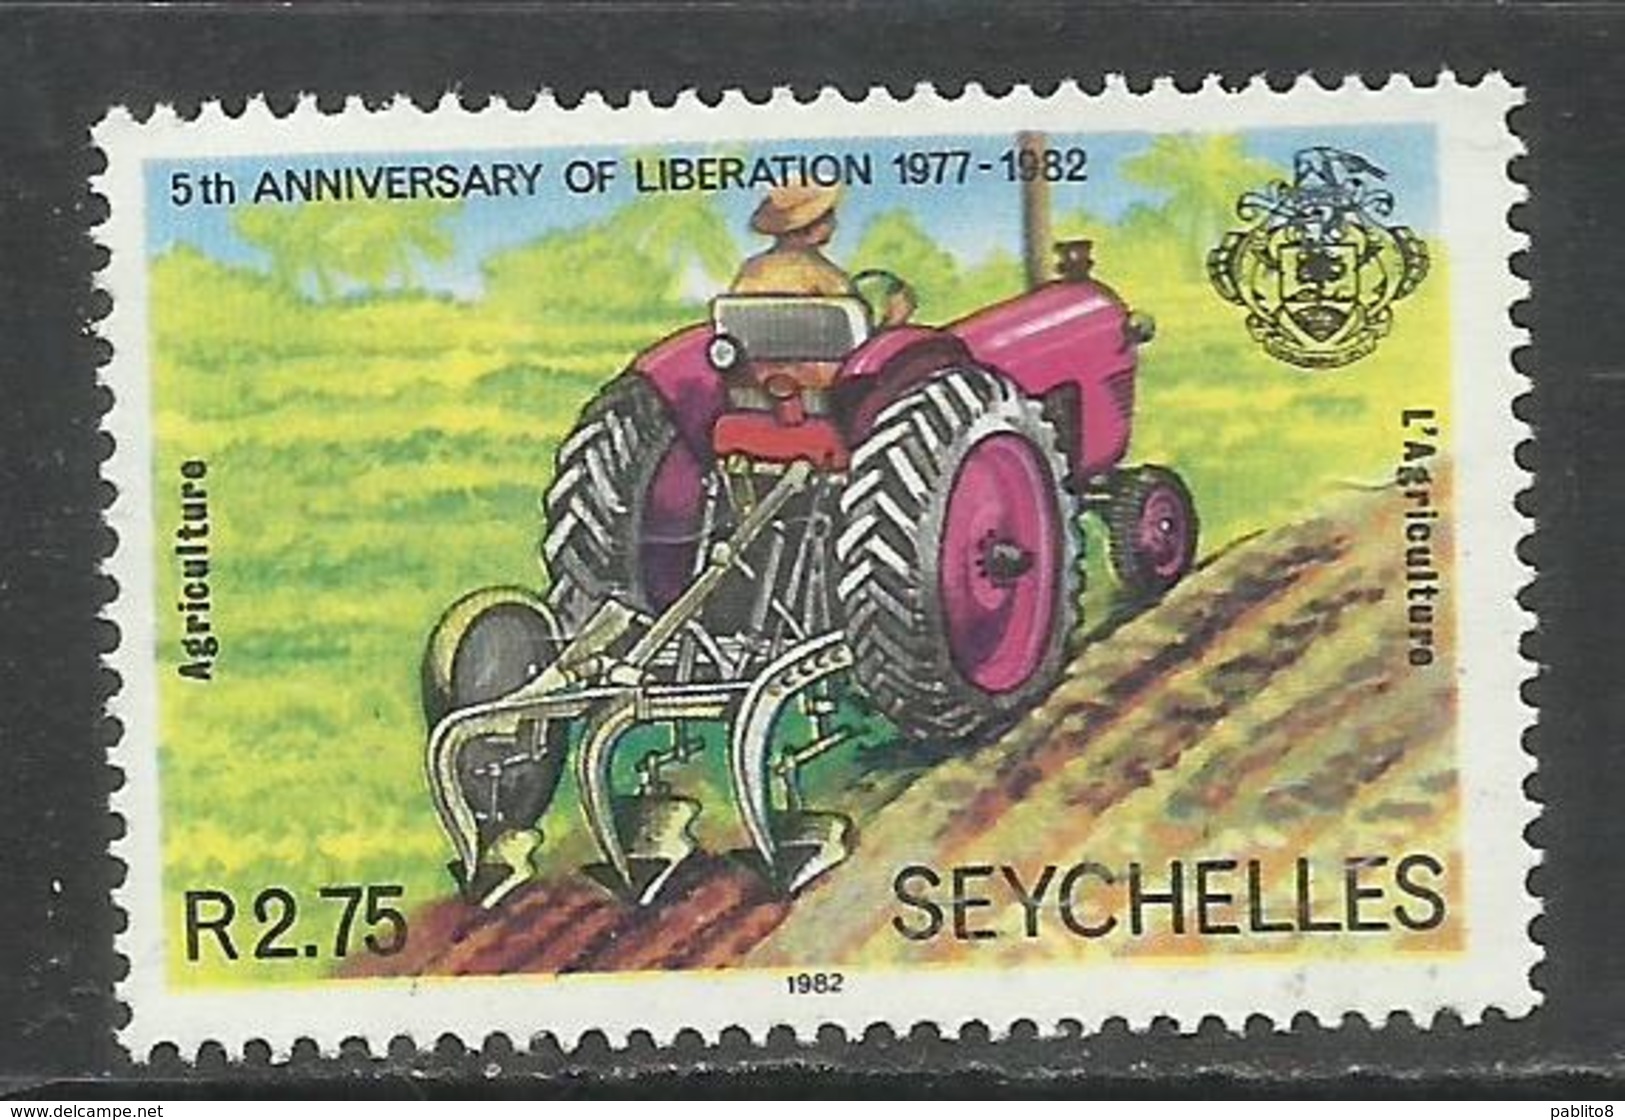 SEYCHELLES 1982 ANNIVERSARY OF LIBERATION OX CART 2.75r MNH - Seychelles (1976-...)